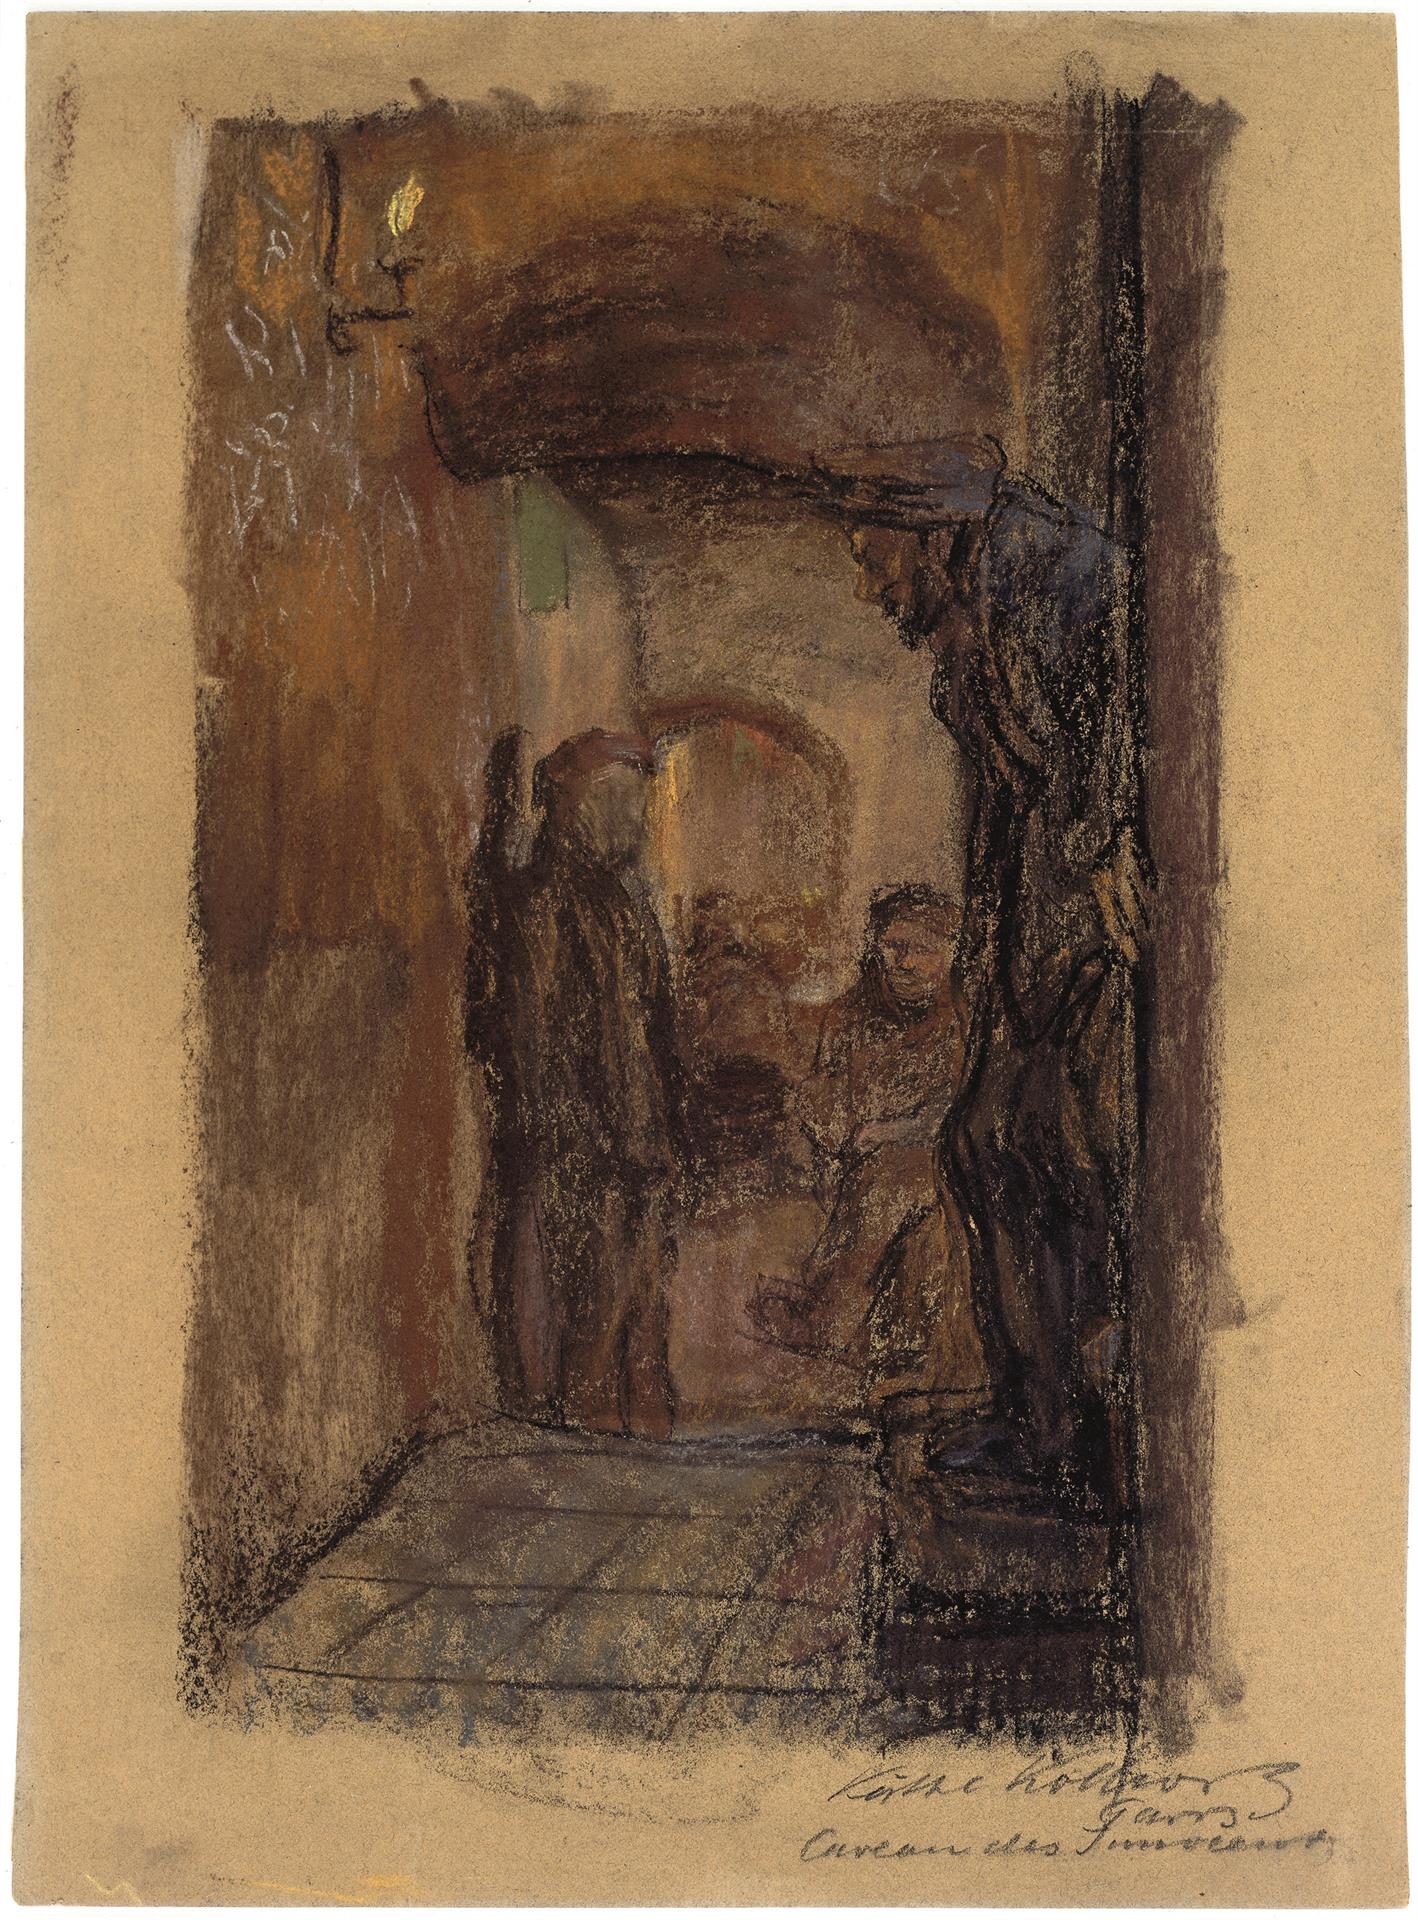 Käthe Kollwitz, Caveau des Innocents, 1904, coloured chalk on brownish drawing cardboard, NT 275, Cologne Kollwitz Collection © Käthe Kollwitz Museum Köln